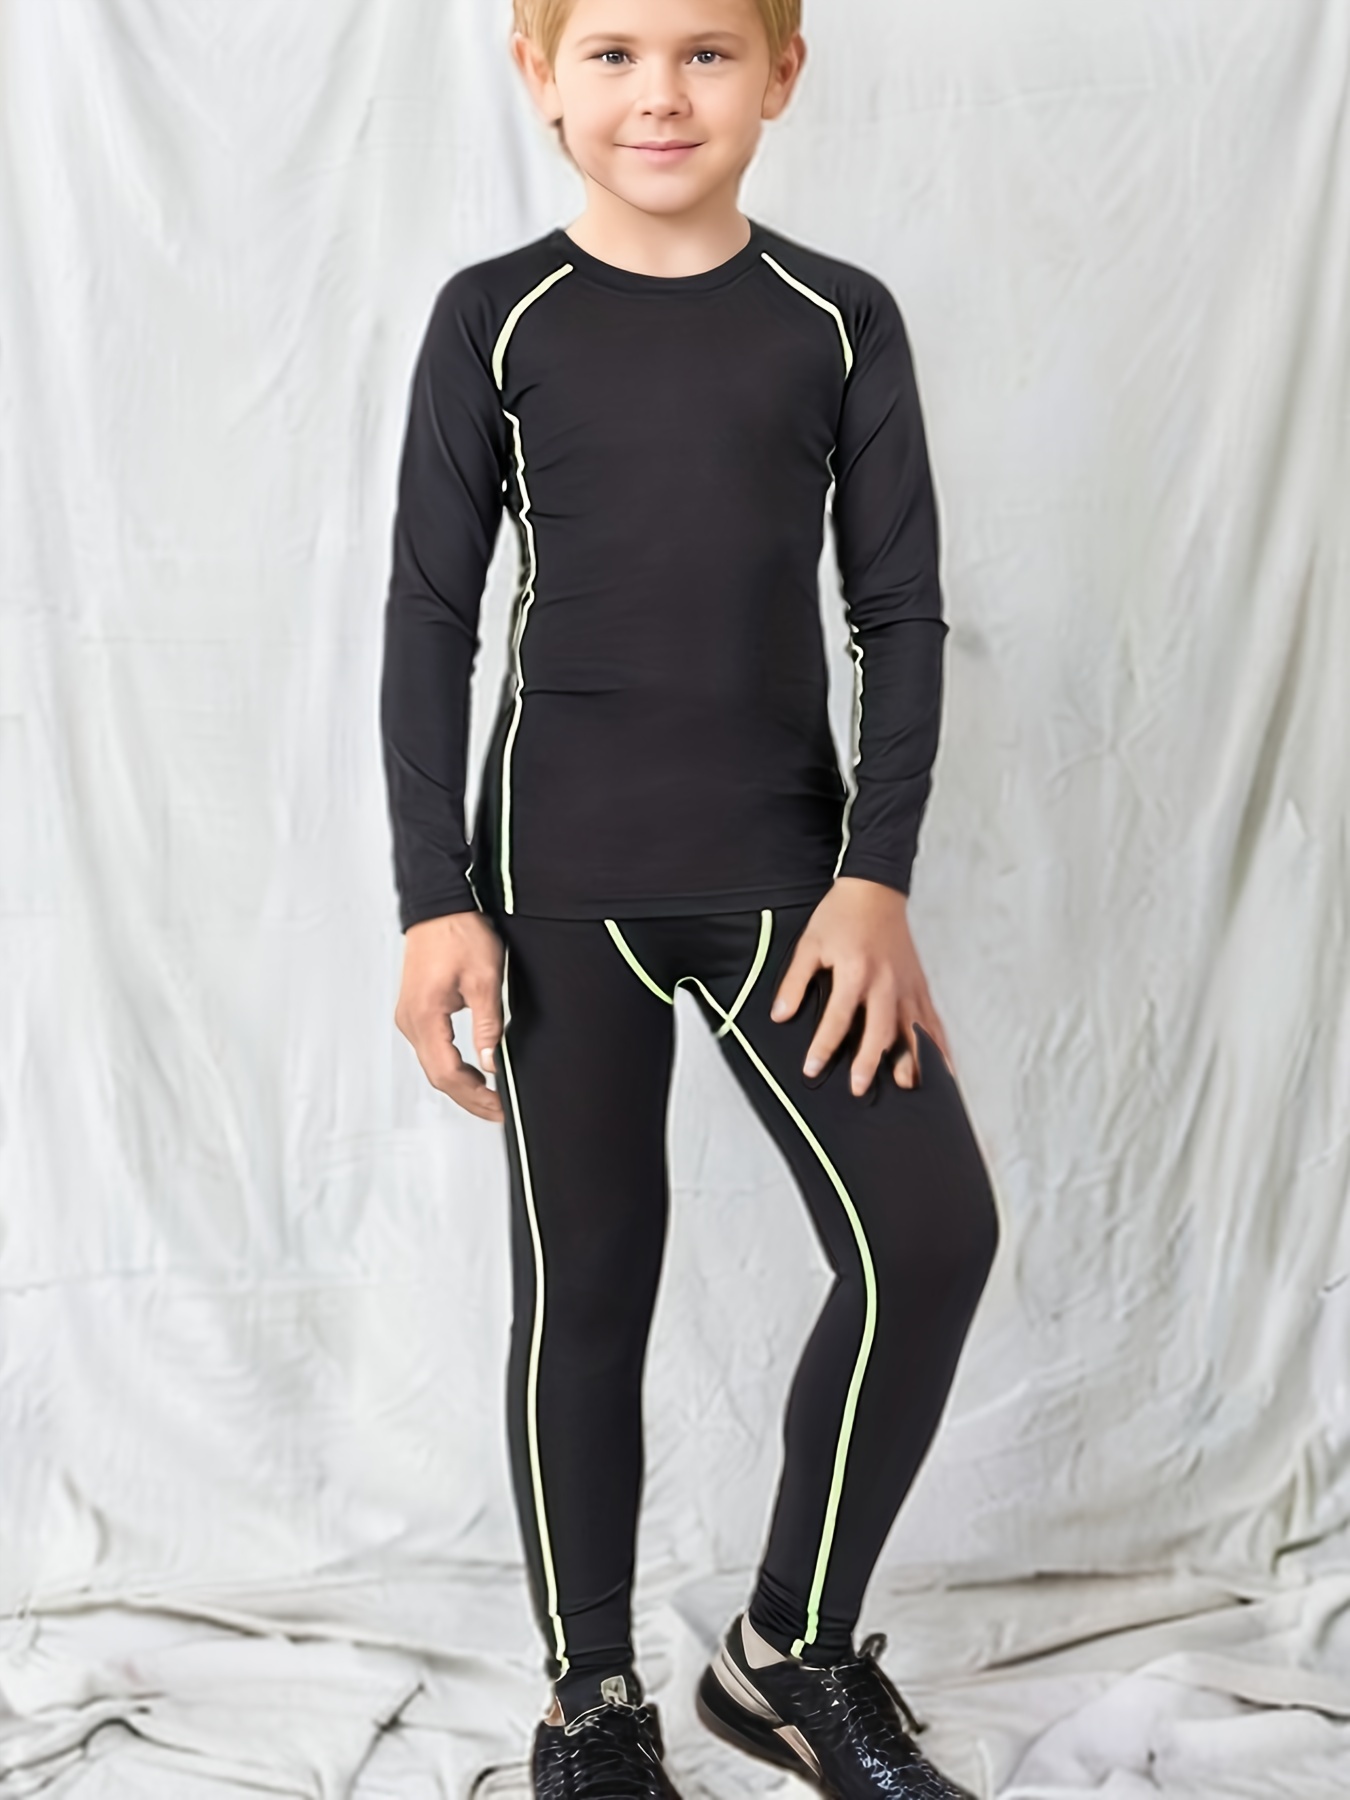 DIABO Mens Rash Guard Pants Long Swim Leggings Swimwear Wetsuit